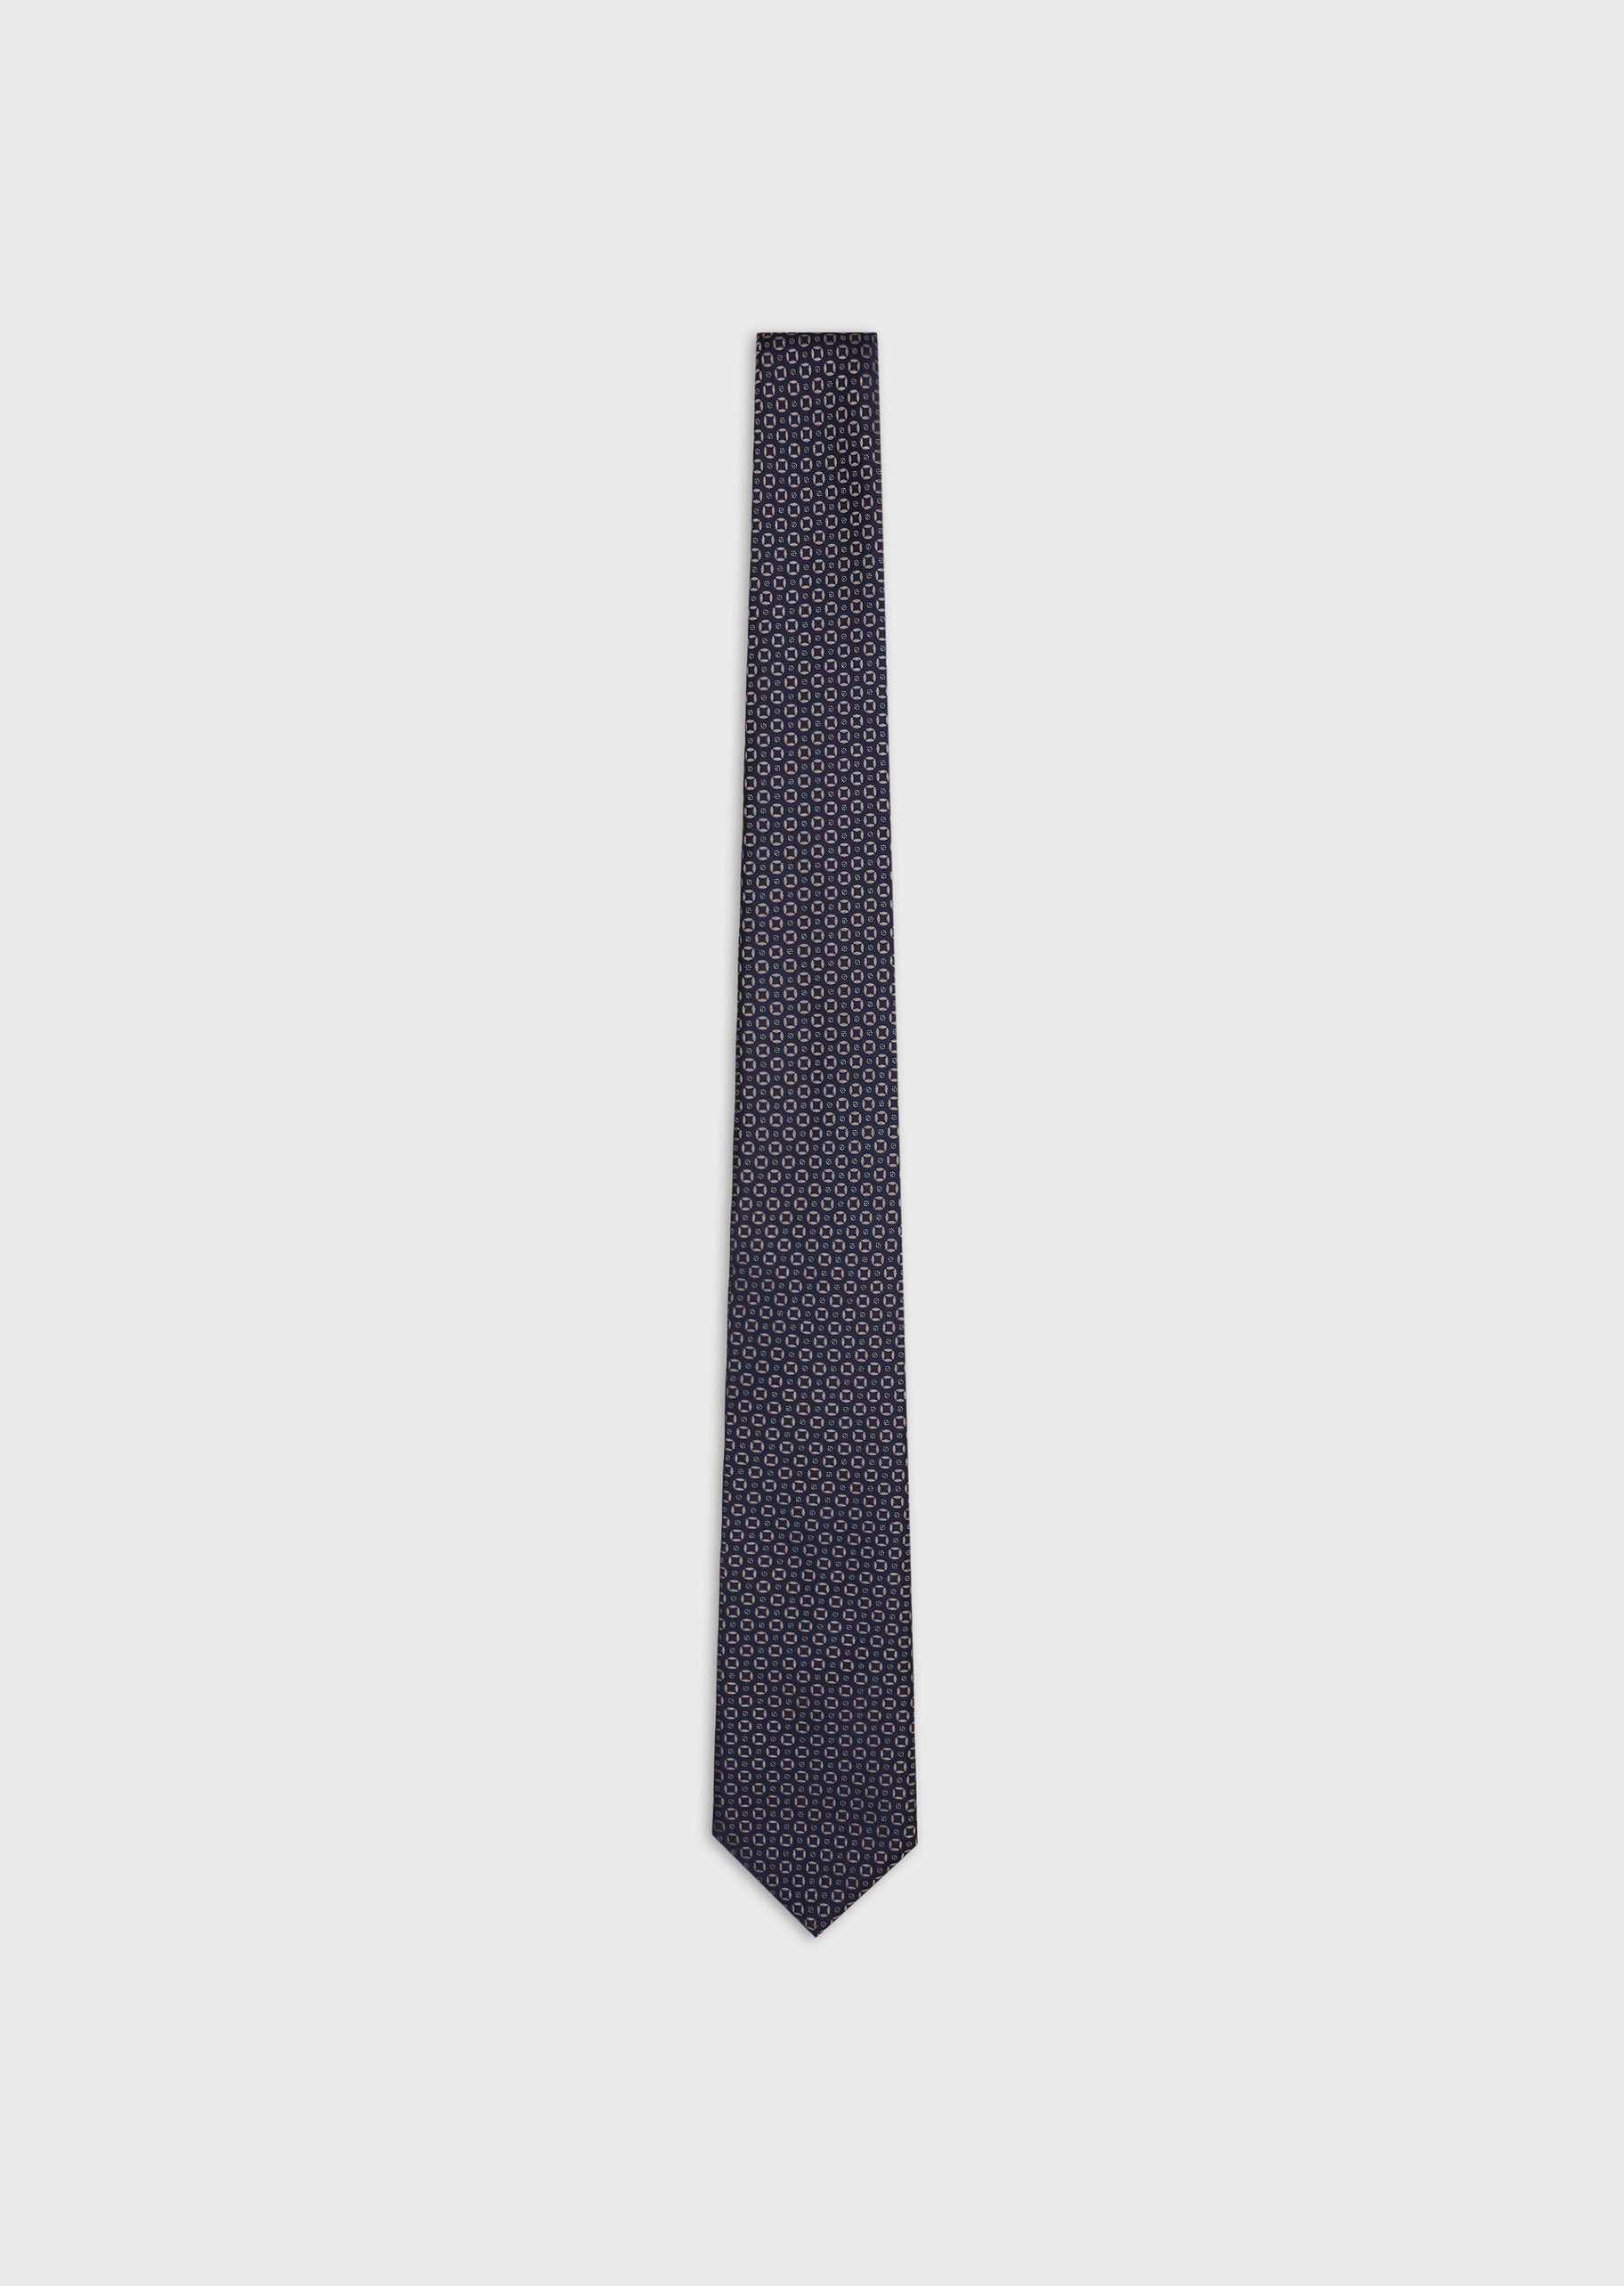 Giorgio Armani 男士休闲光泽感桑蚕丝通体几何花纹领带